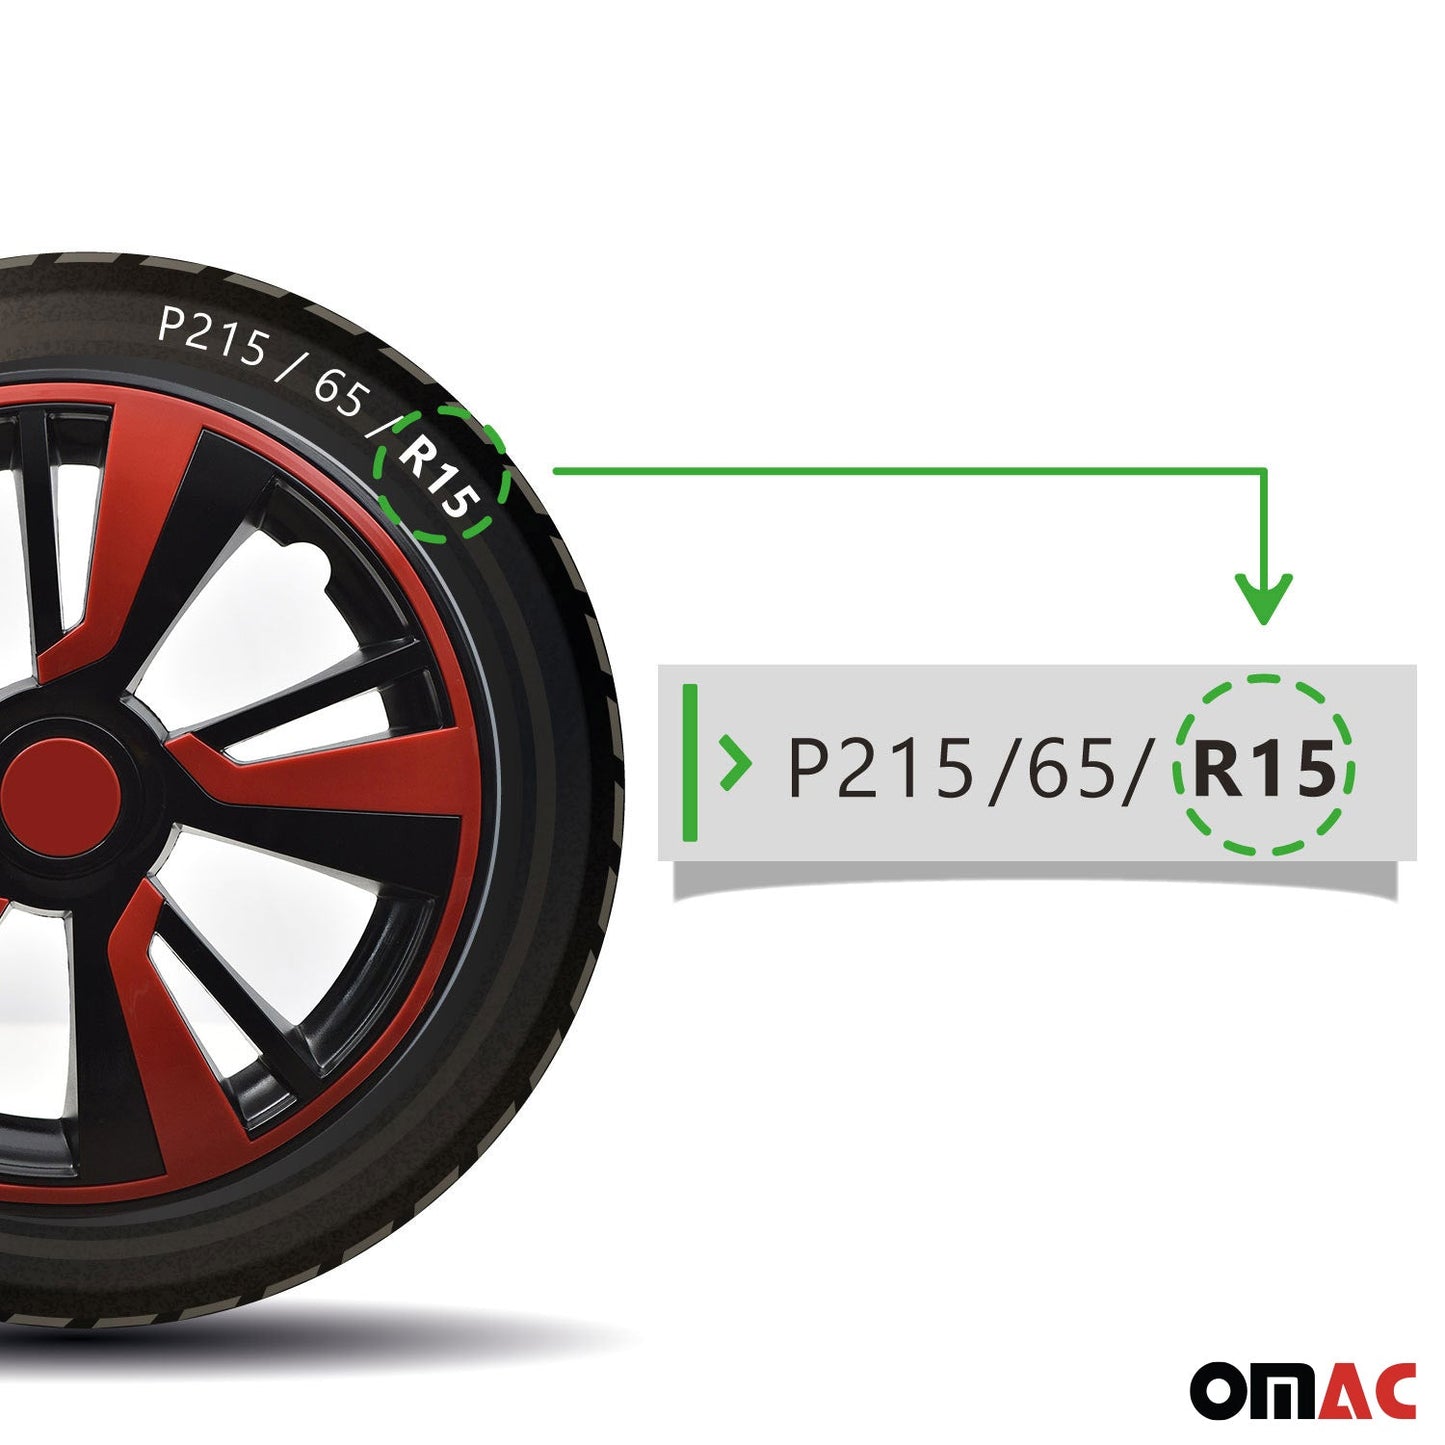 OMAC 15" Hubcaps Wheel Rim Cover Black with Red Insert 4pcs Set VRT99FR243B15R